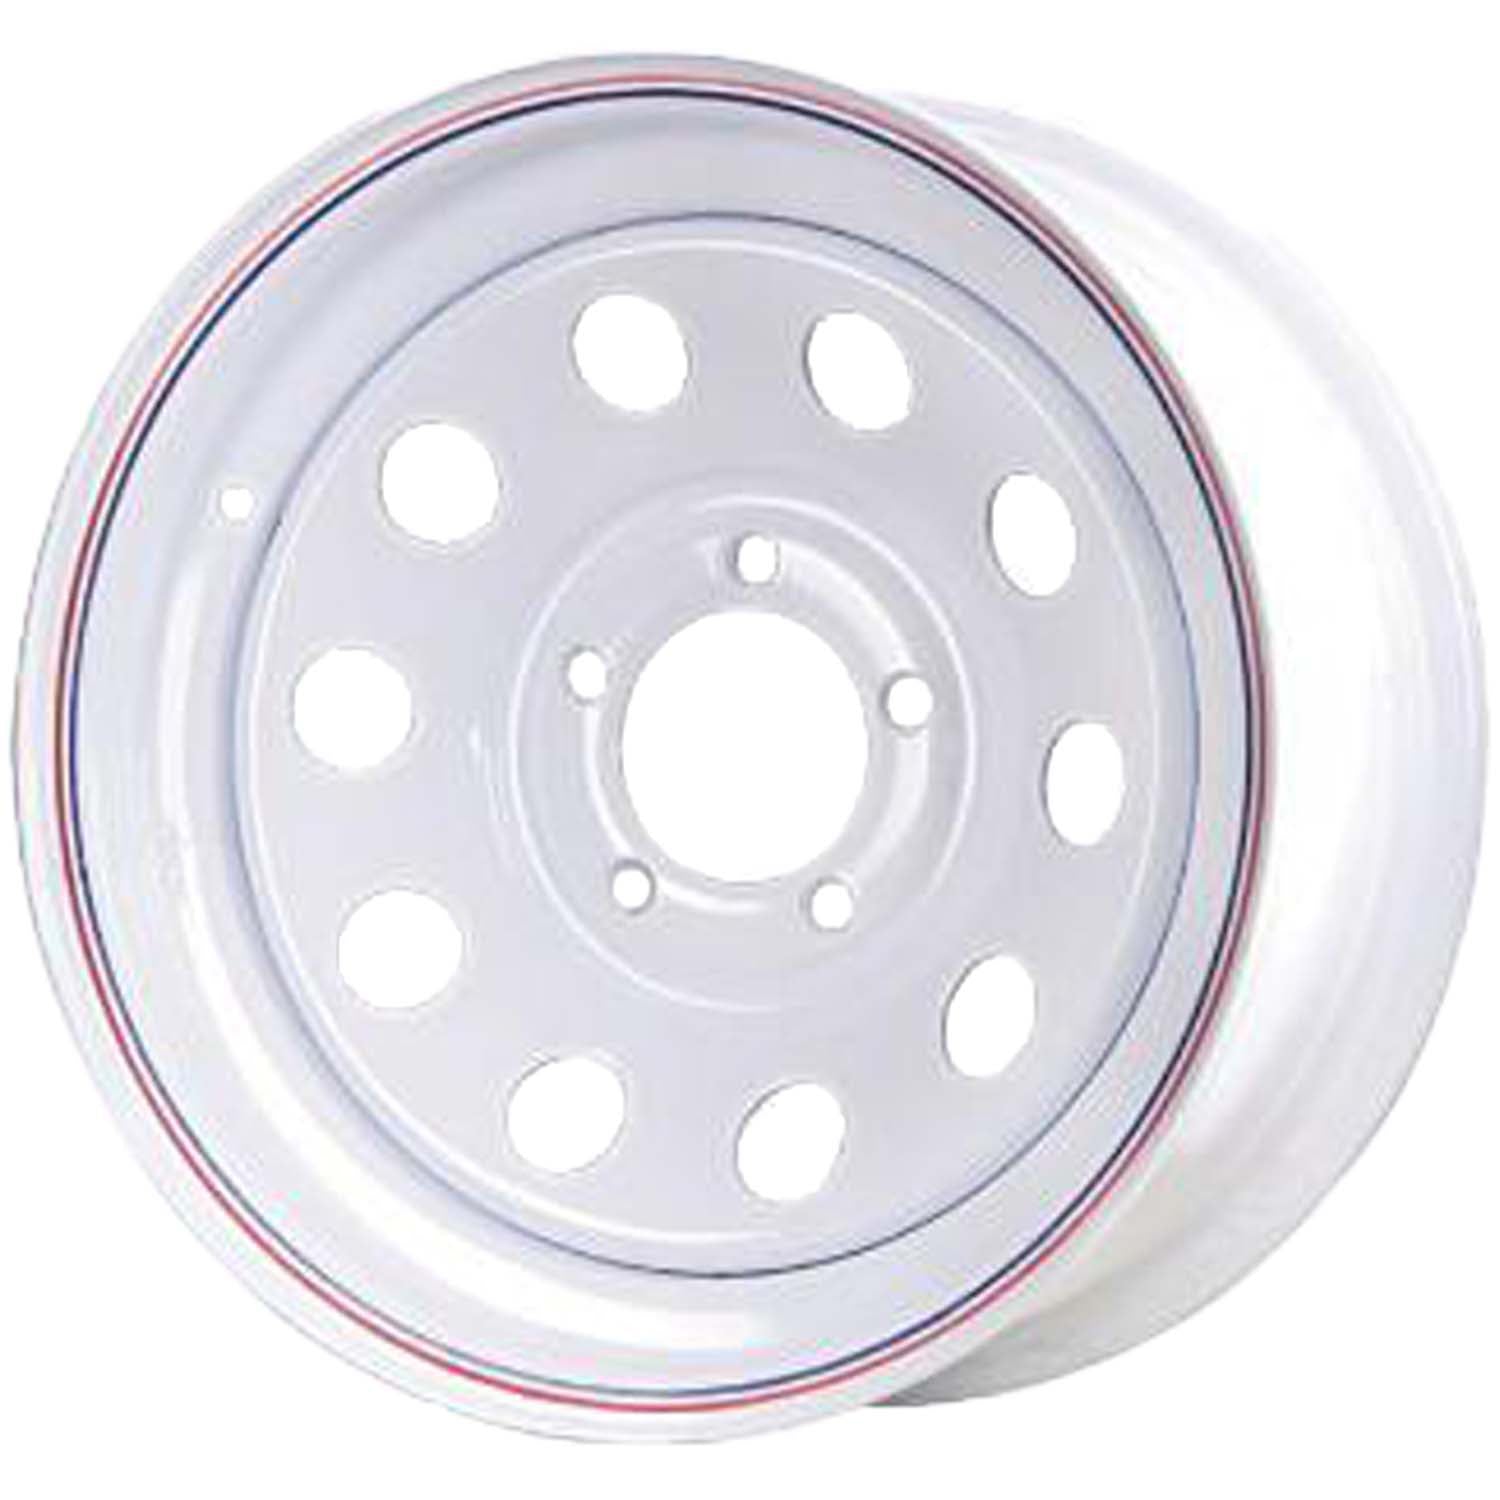 Unique Series 13x4.5 5 On 4.5 Modular Steel Trailer Wheel White with Pin Stripes